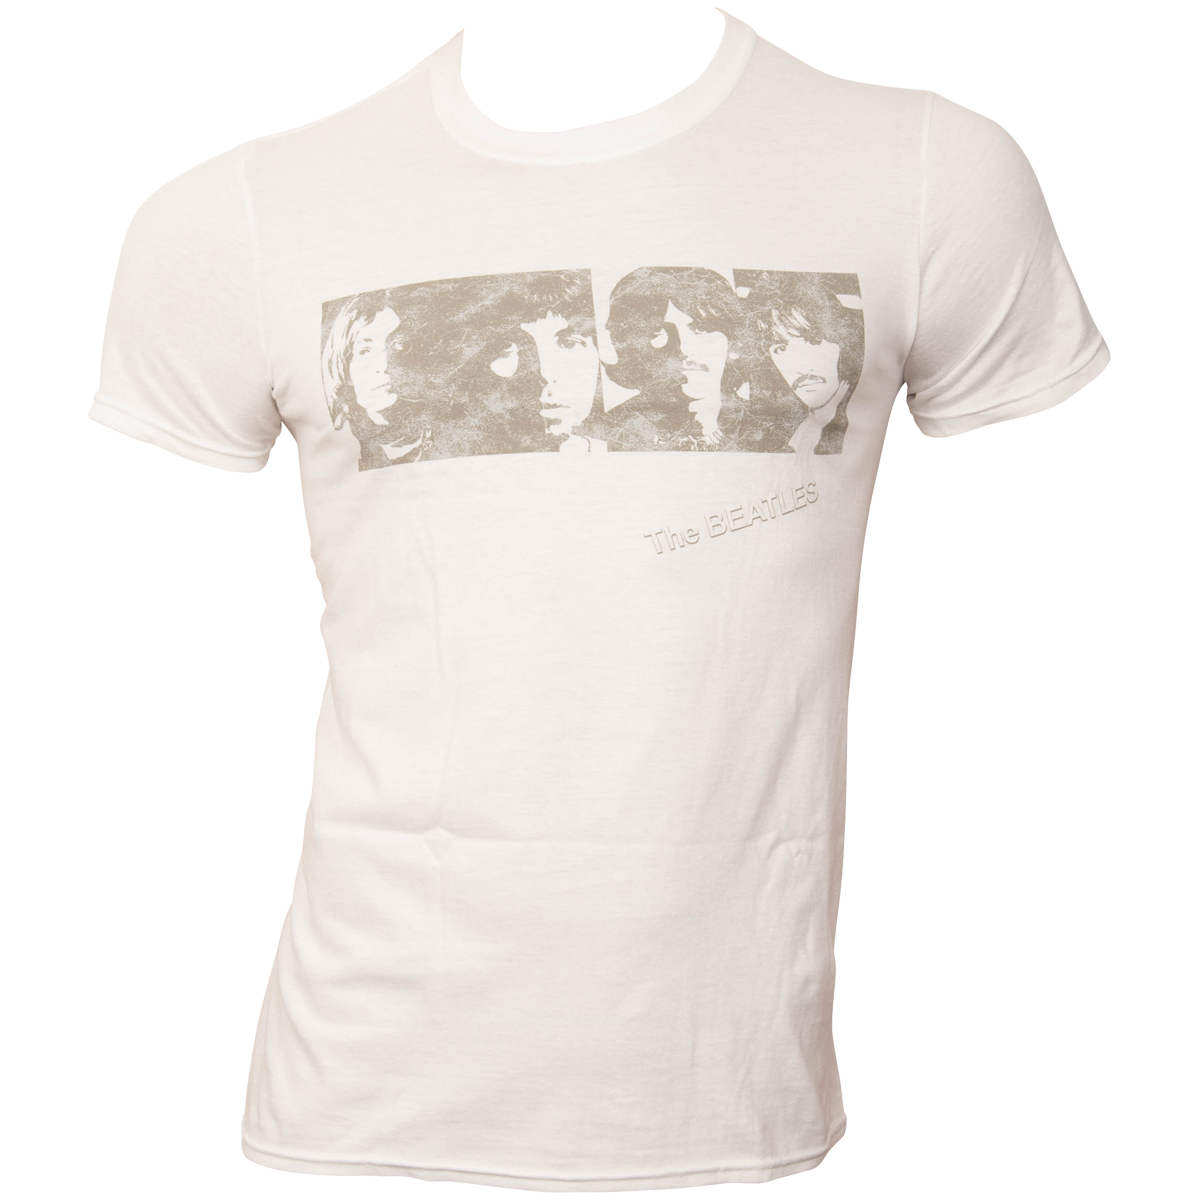 The Beatles - T-Shirt White Album Faces - weiß